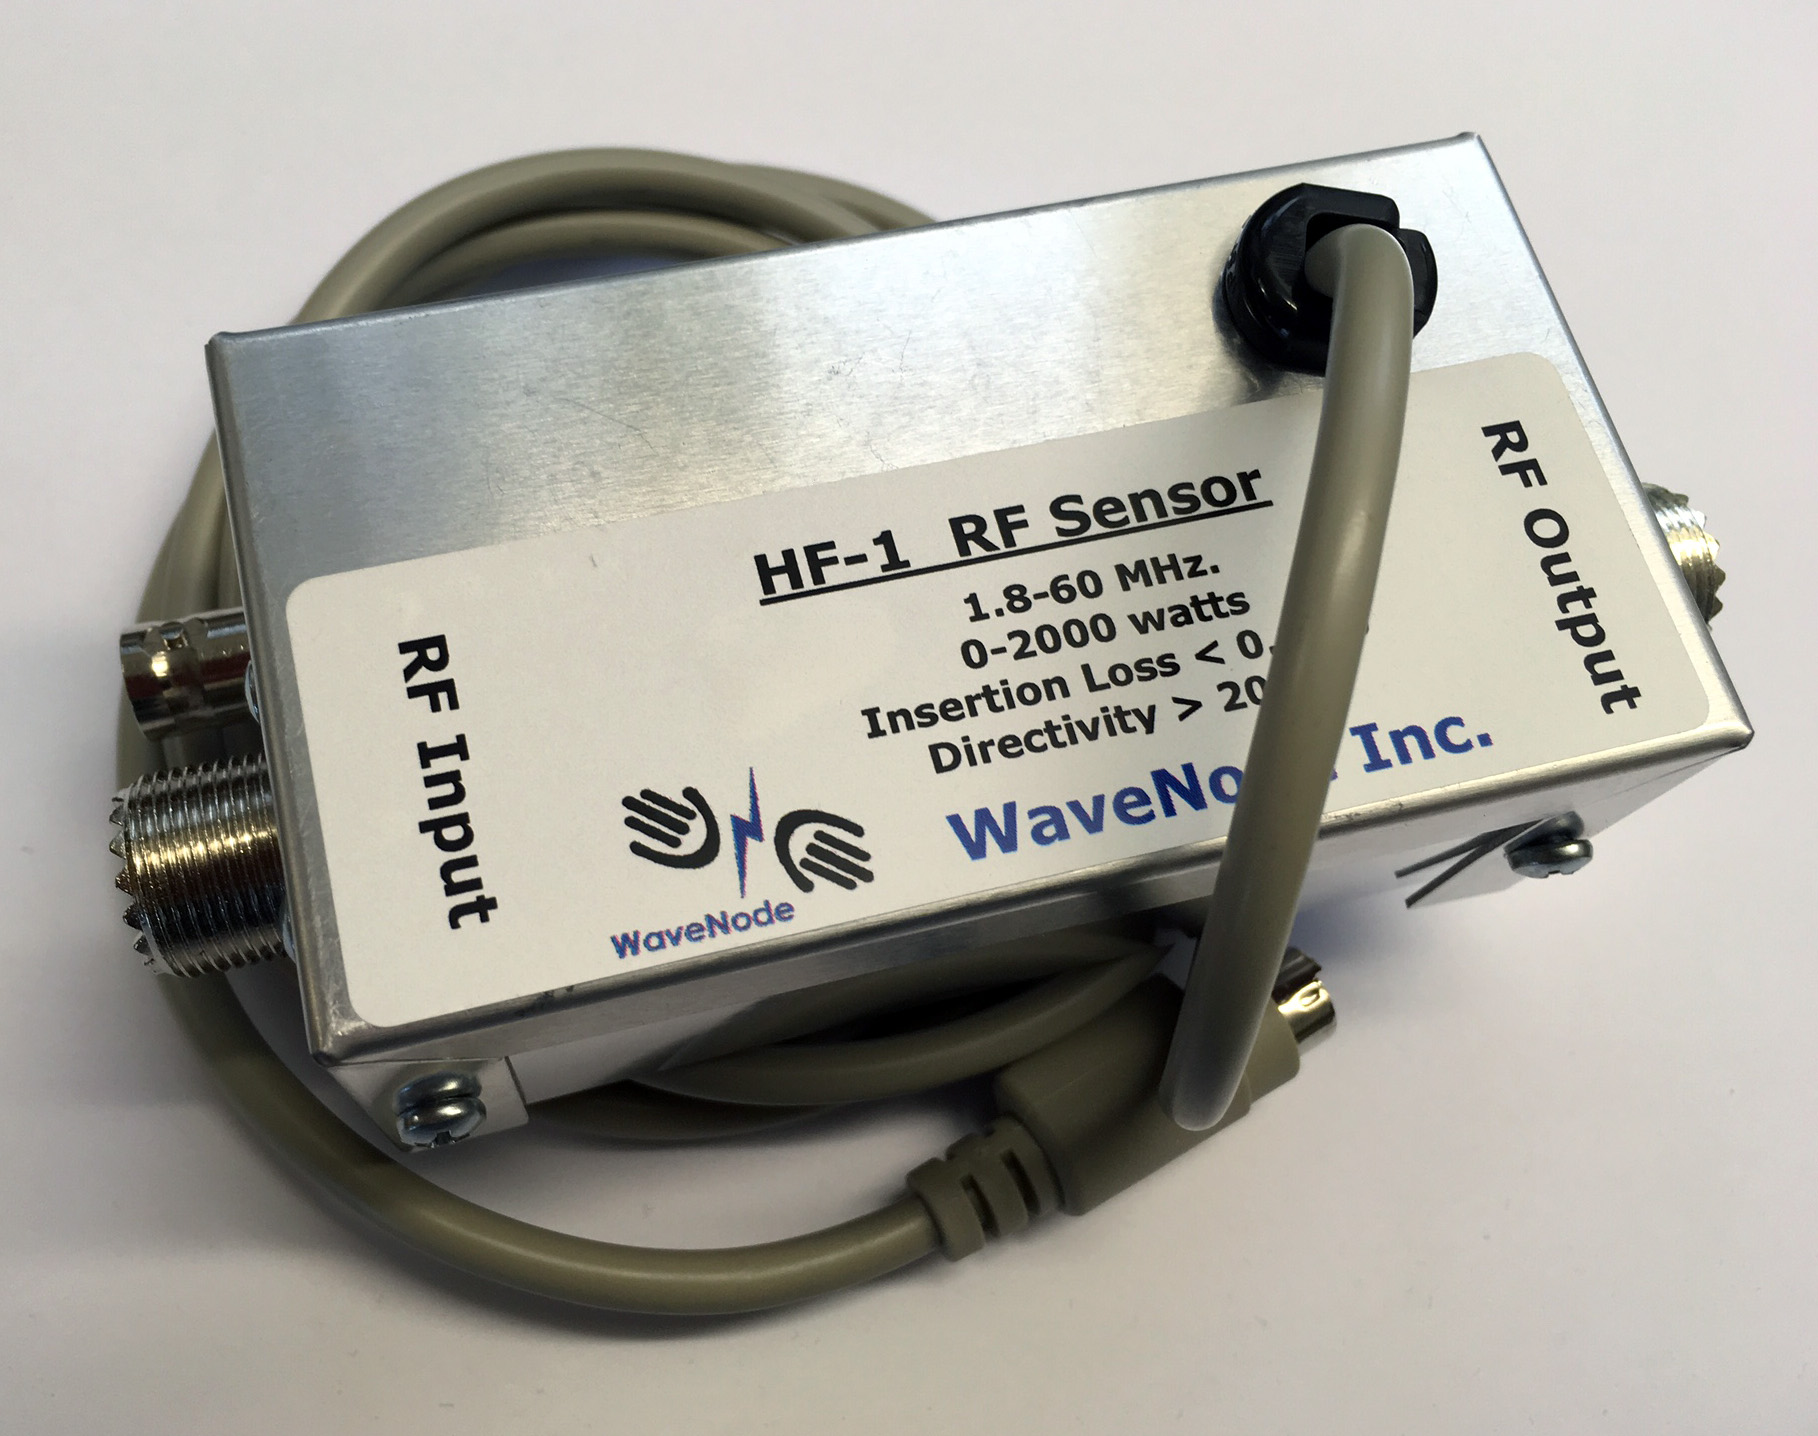 Wavenode HF-1 sensor with ANAN optimised RFView